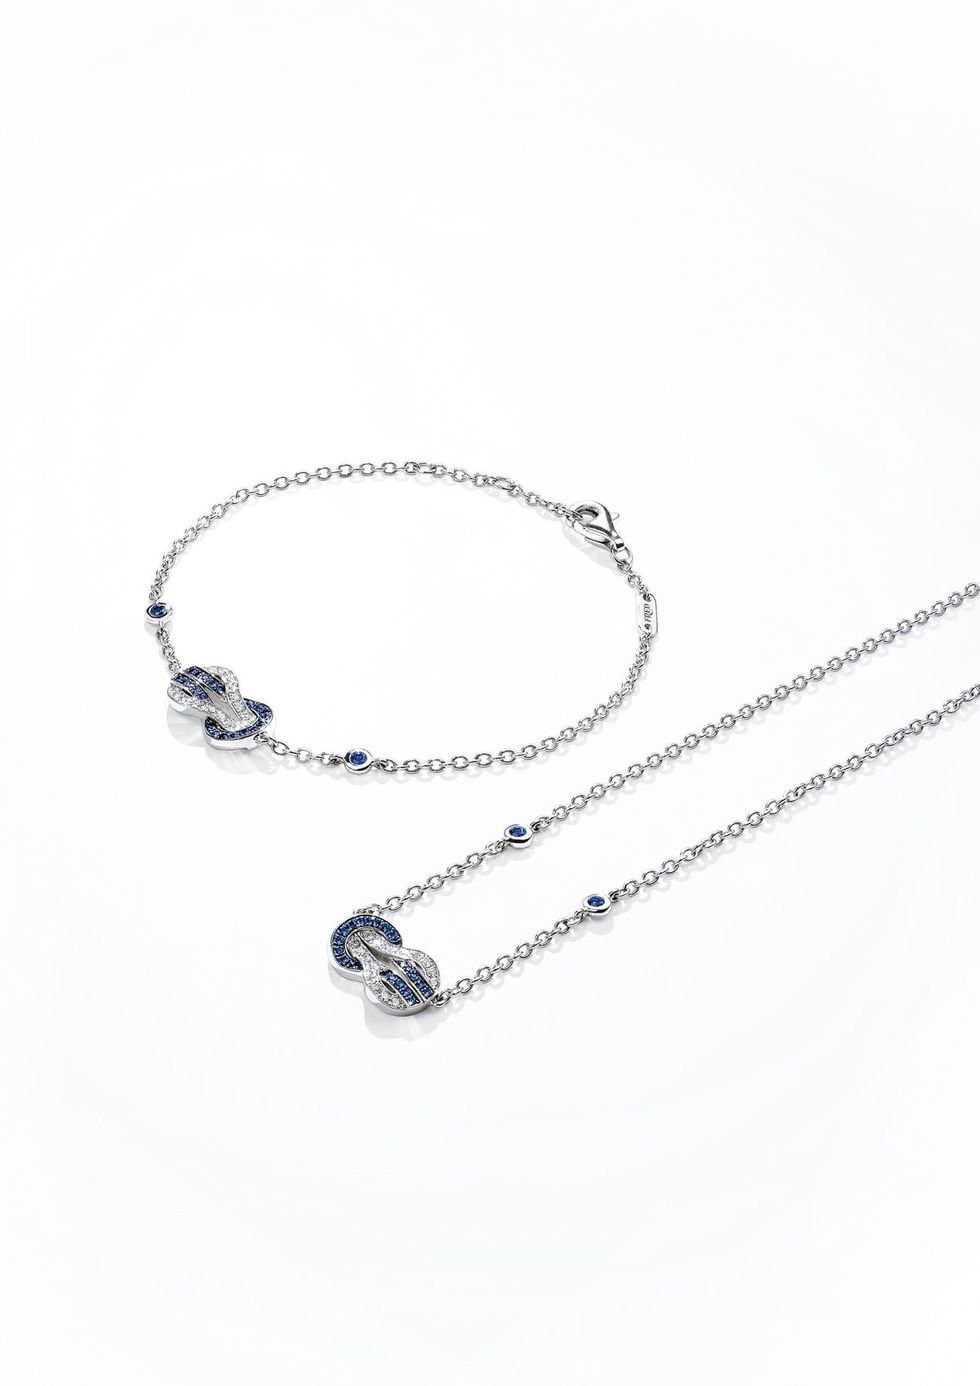 Chain, Fashion accessory, Jewellery, Metal, Silver, Bracelet, Platinum, Necklace, Anklet, 